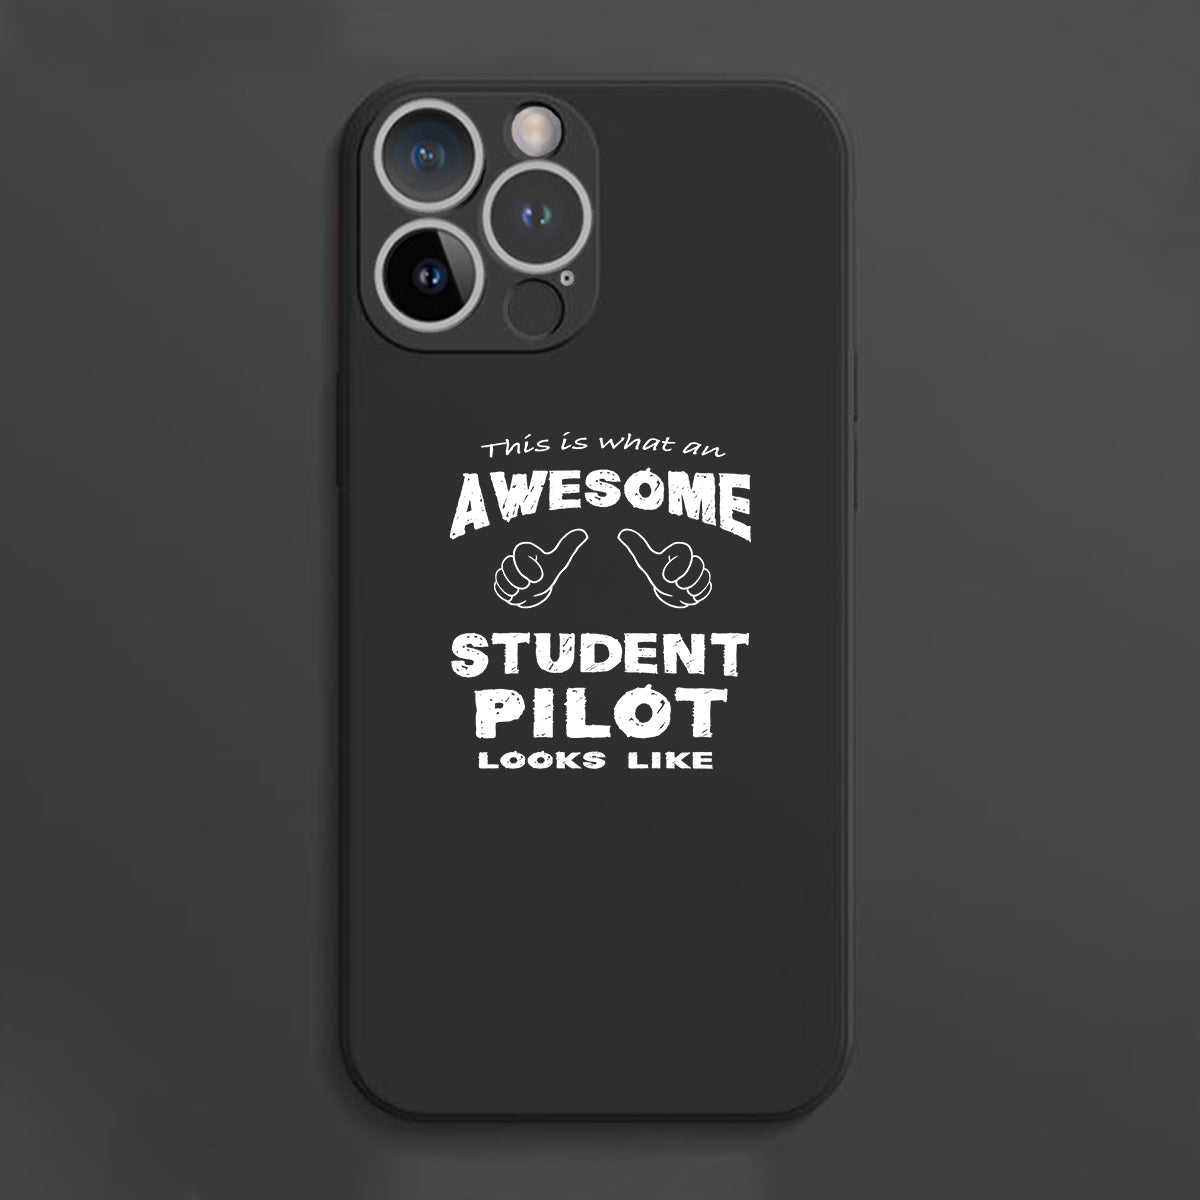 Student Pilot Designed Soft Silicone iPhone Cases